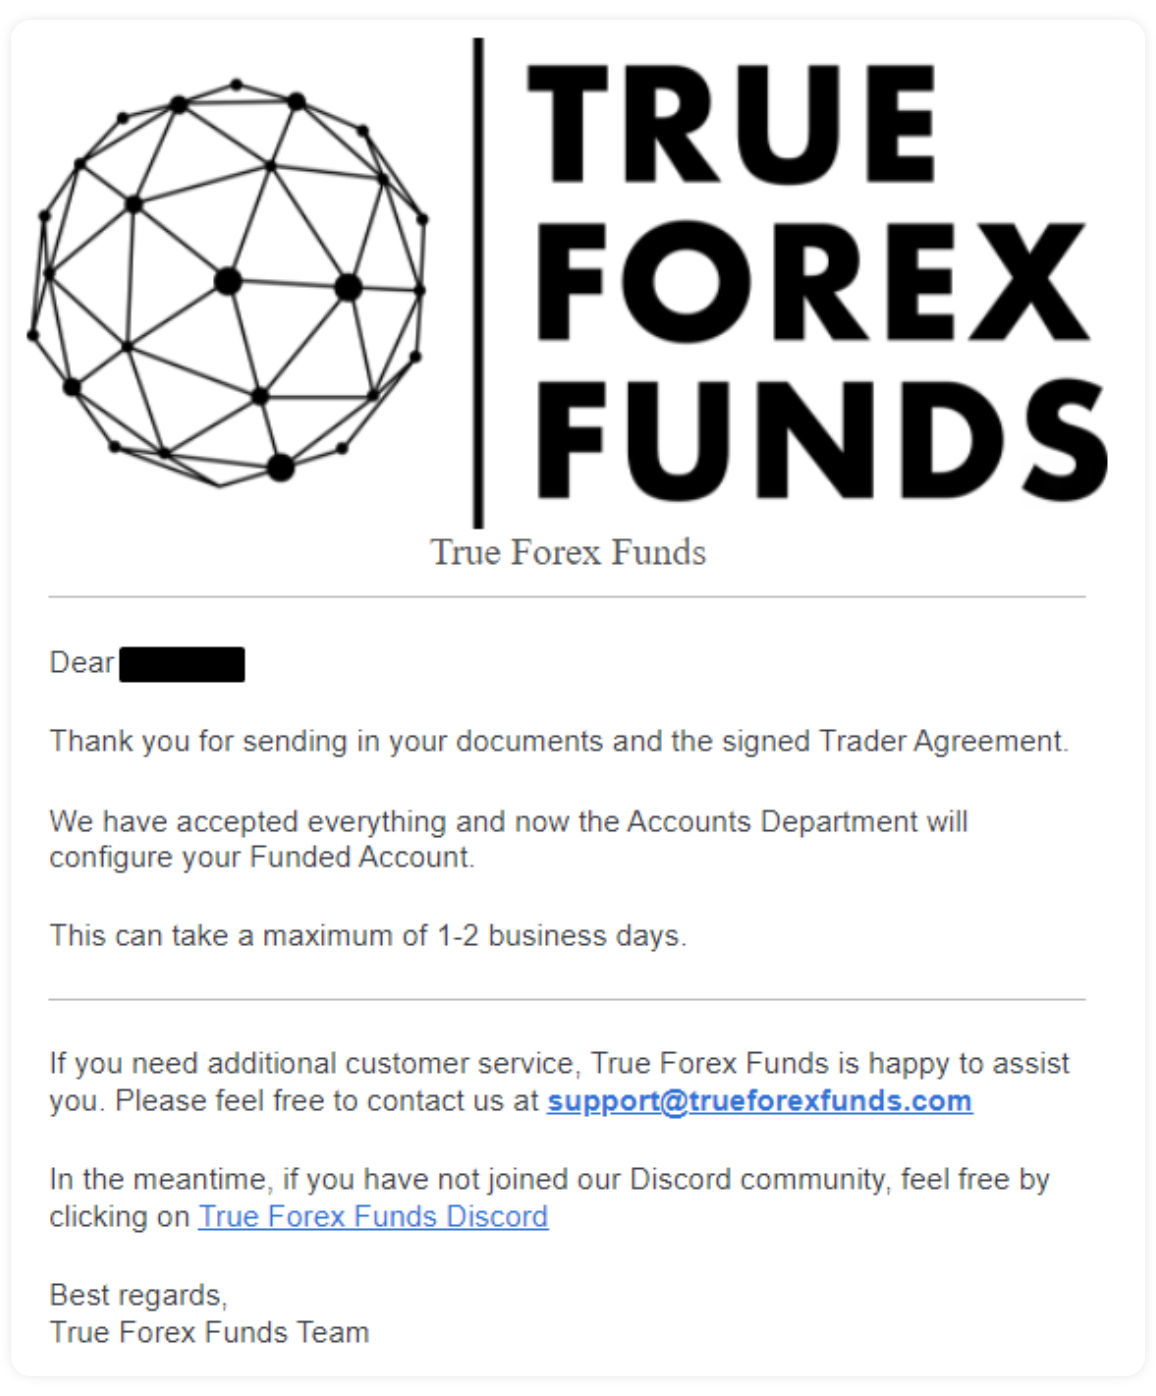 37True Forex Funds